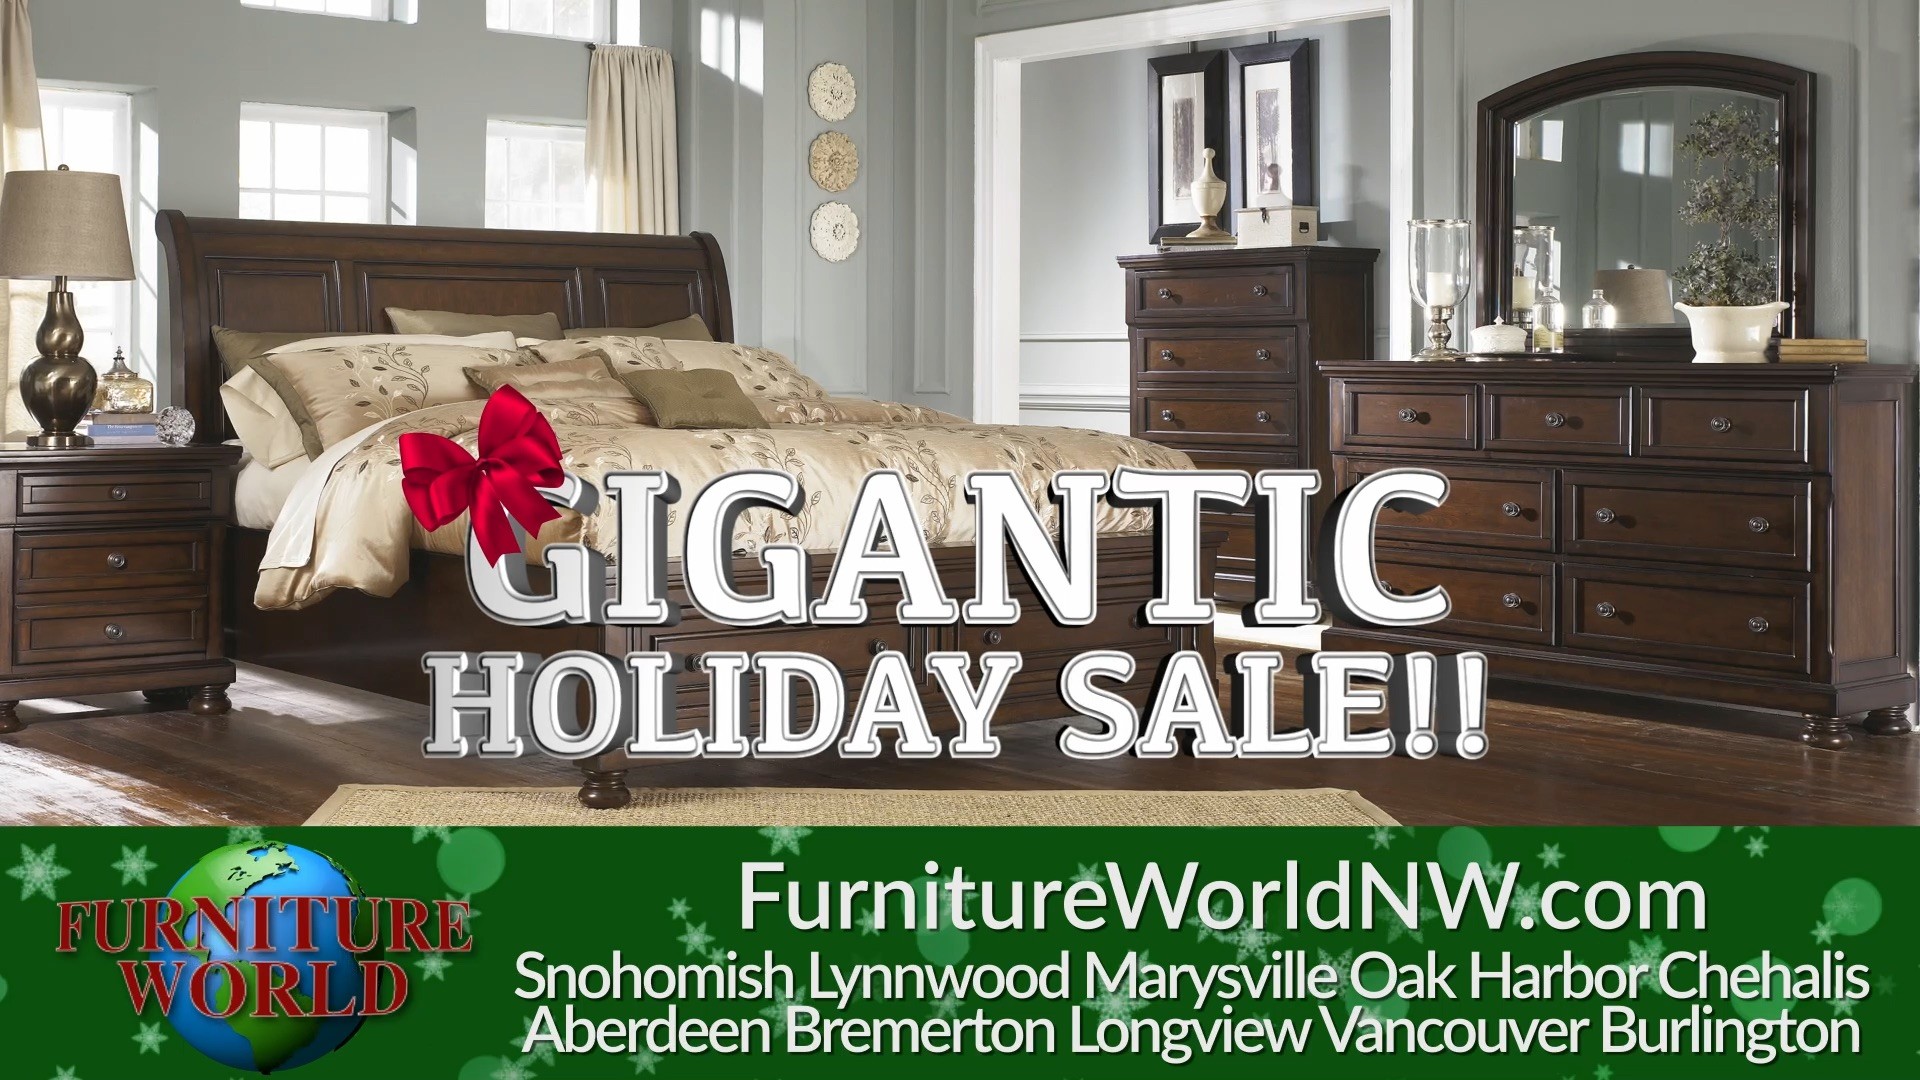 Furniture World: December Holiday Credit